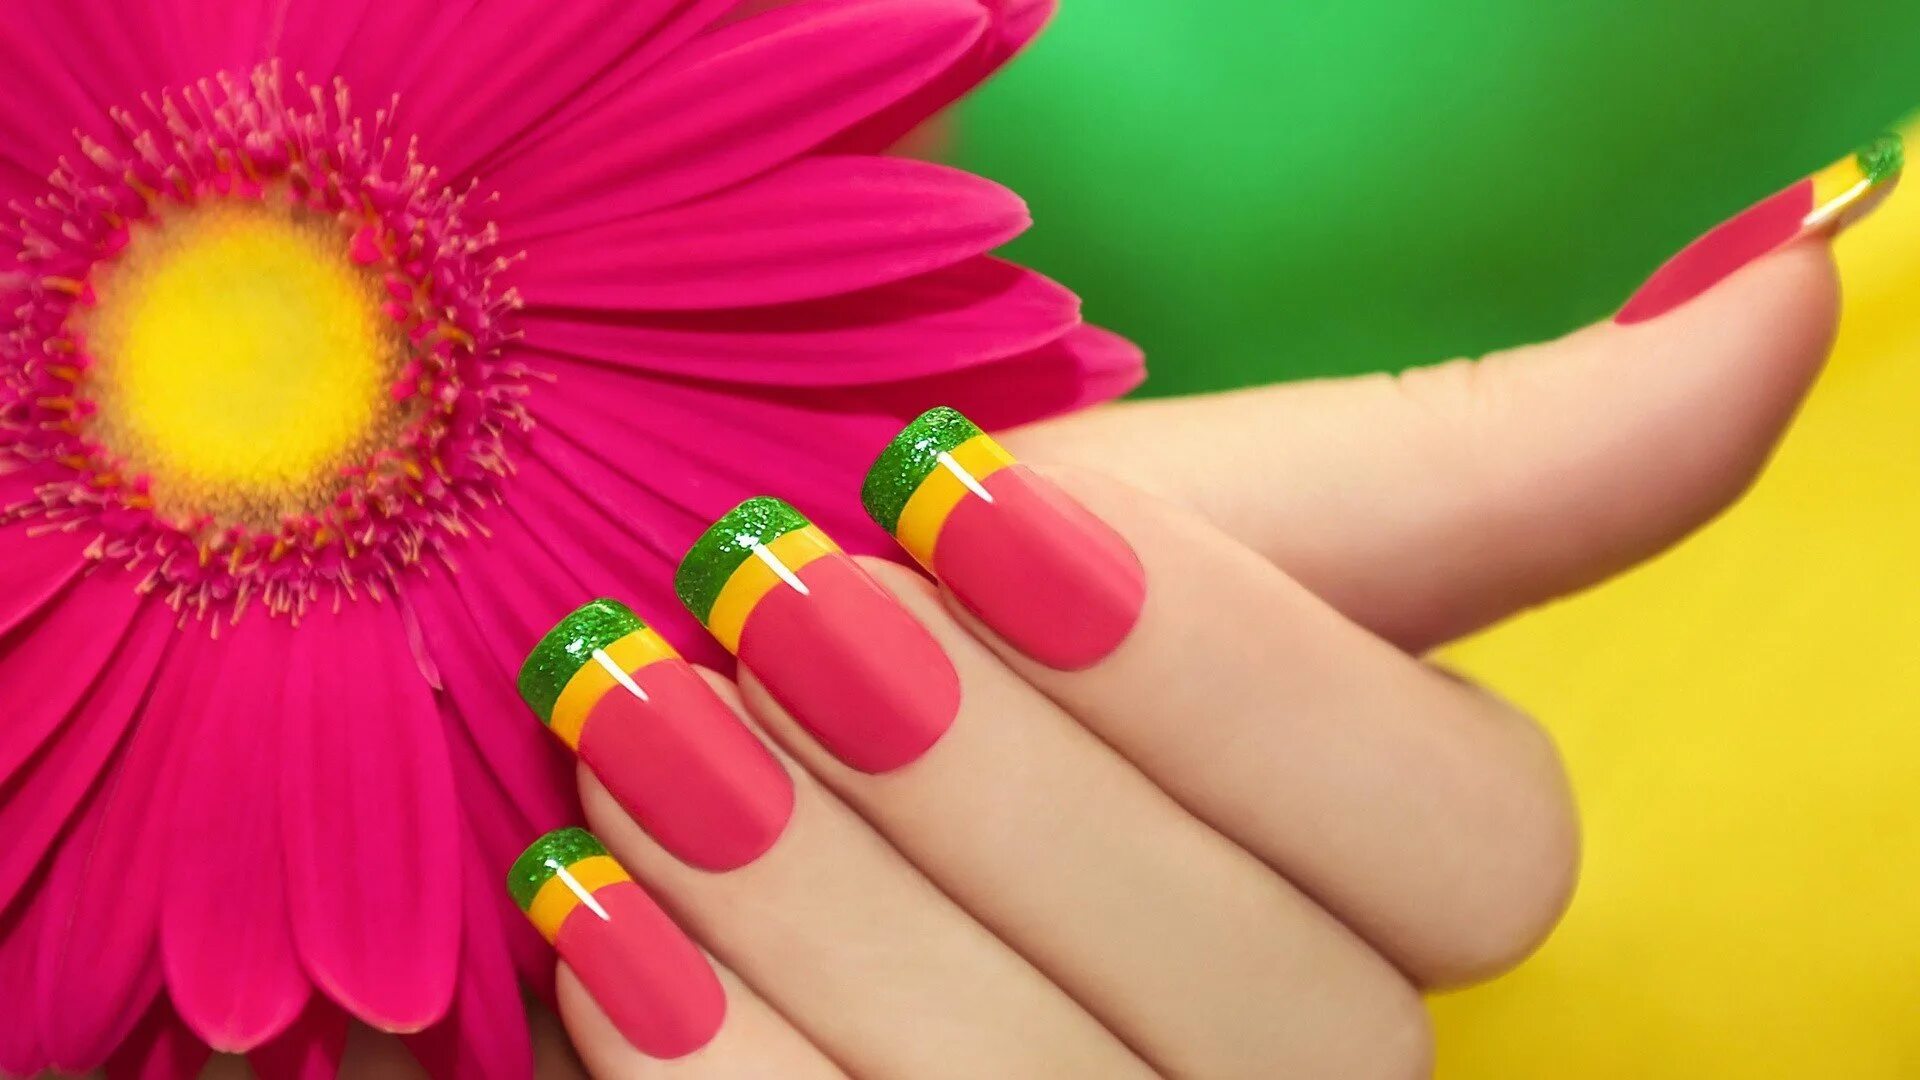 Яркий маникюр. Летний маникюр разноцветный. Разноцветные летние ногти. Маникюр летний яркий красивый. Дизайн маникюра ярких цветов